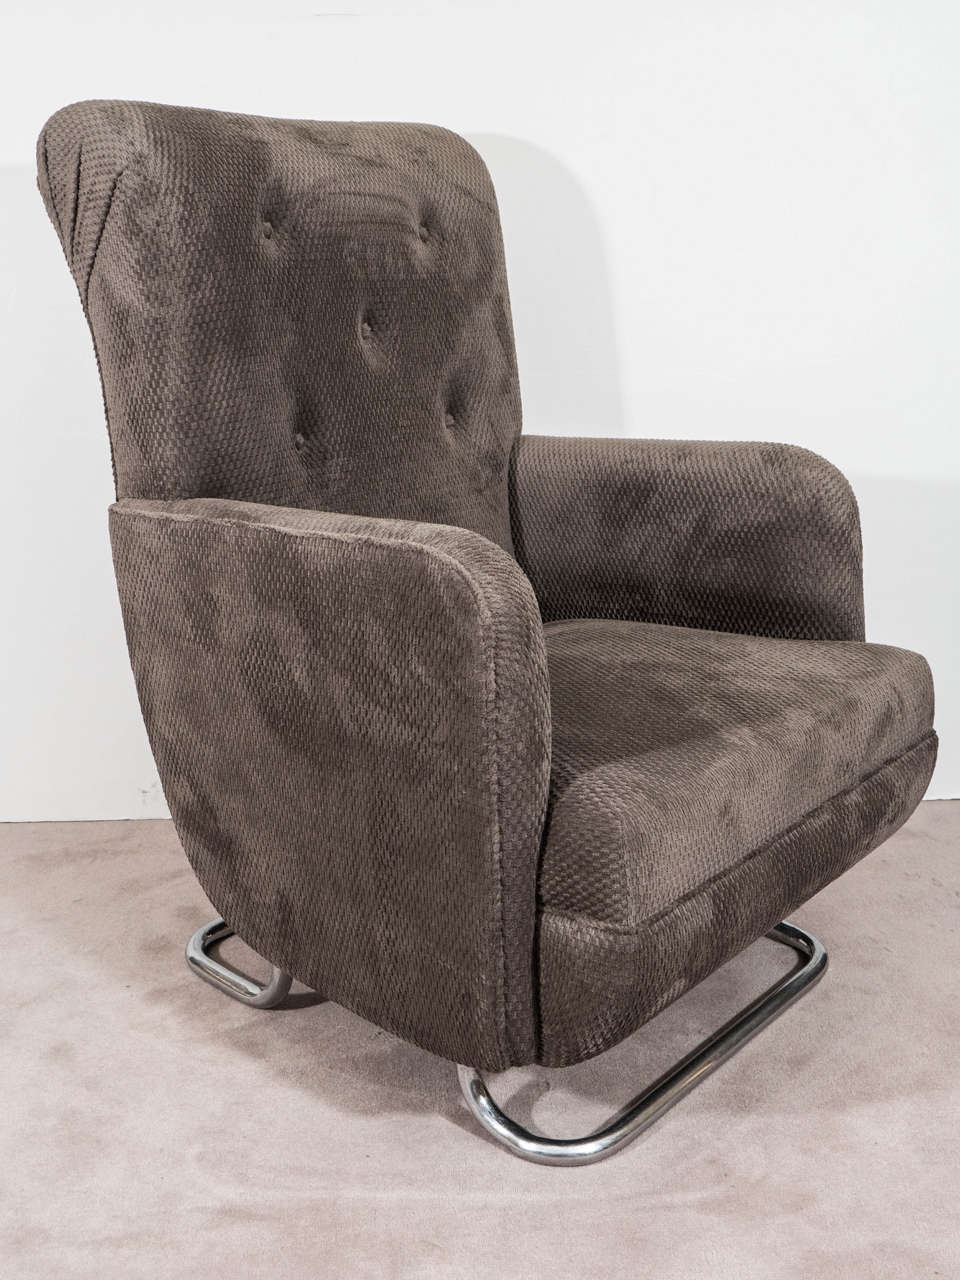 Art Deco Extraordinary Modernist Kem Weber Lounge Chair For Sale